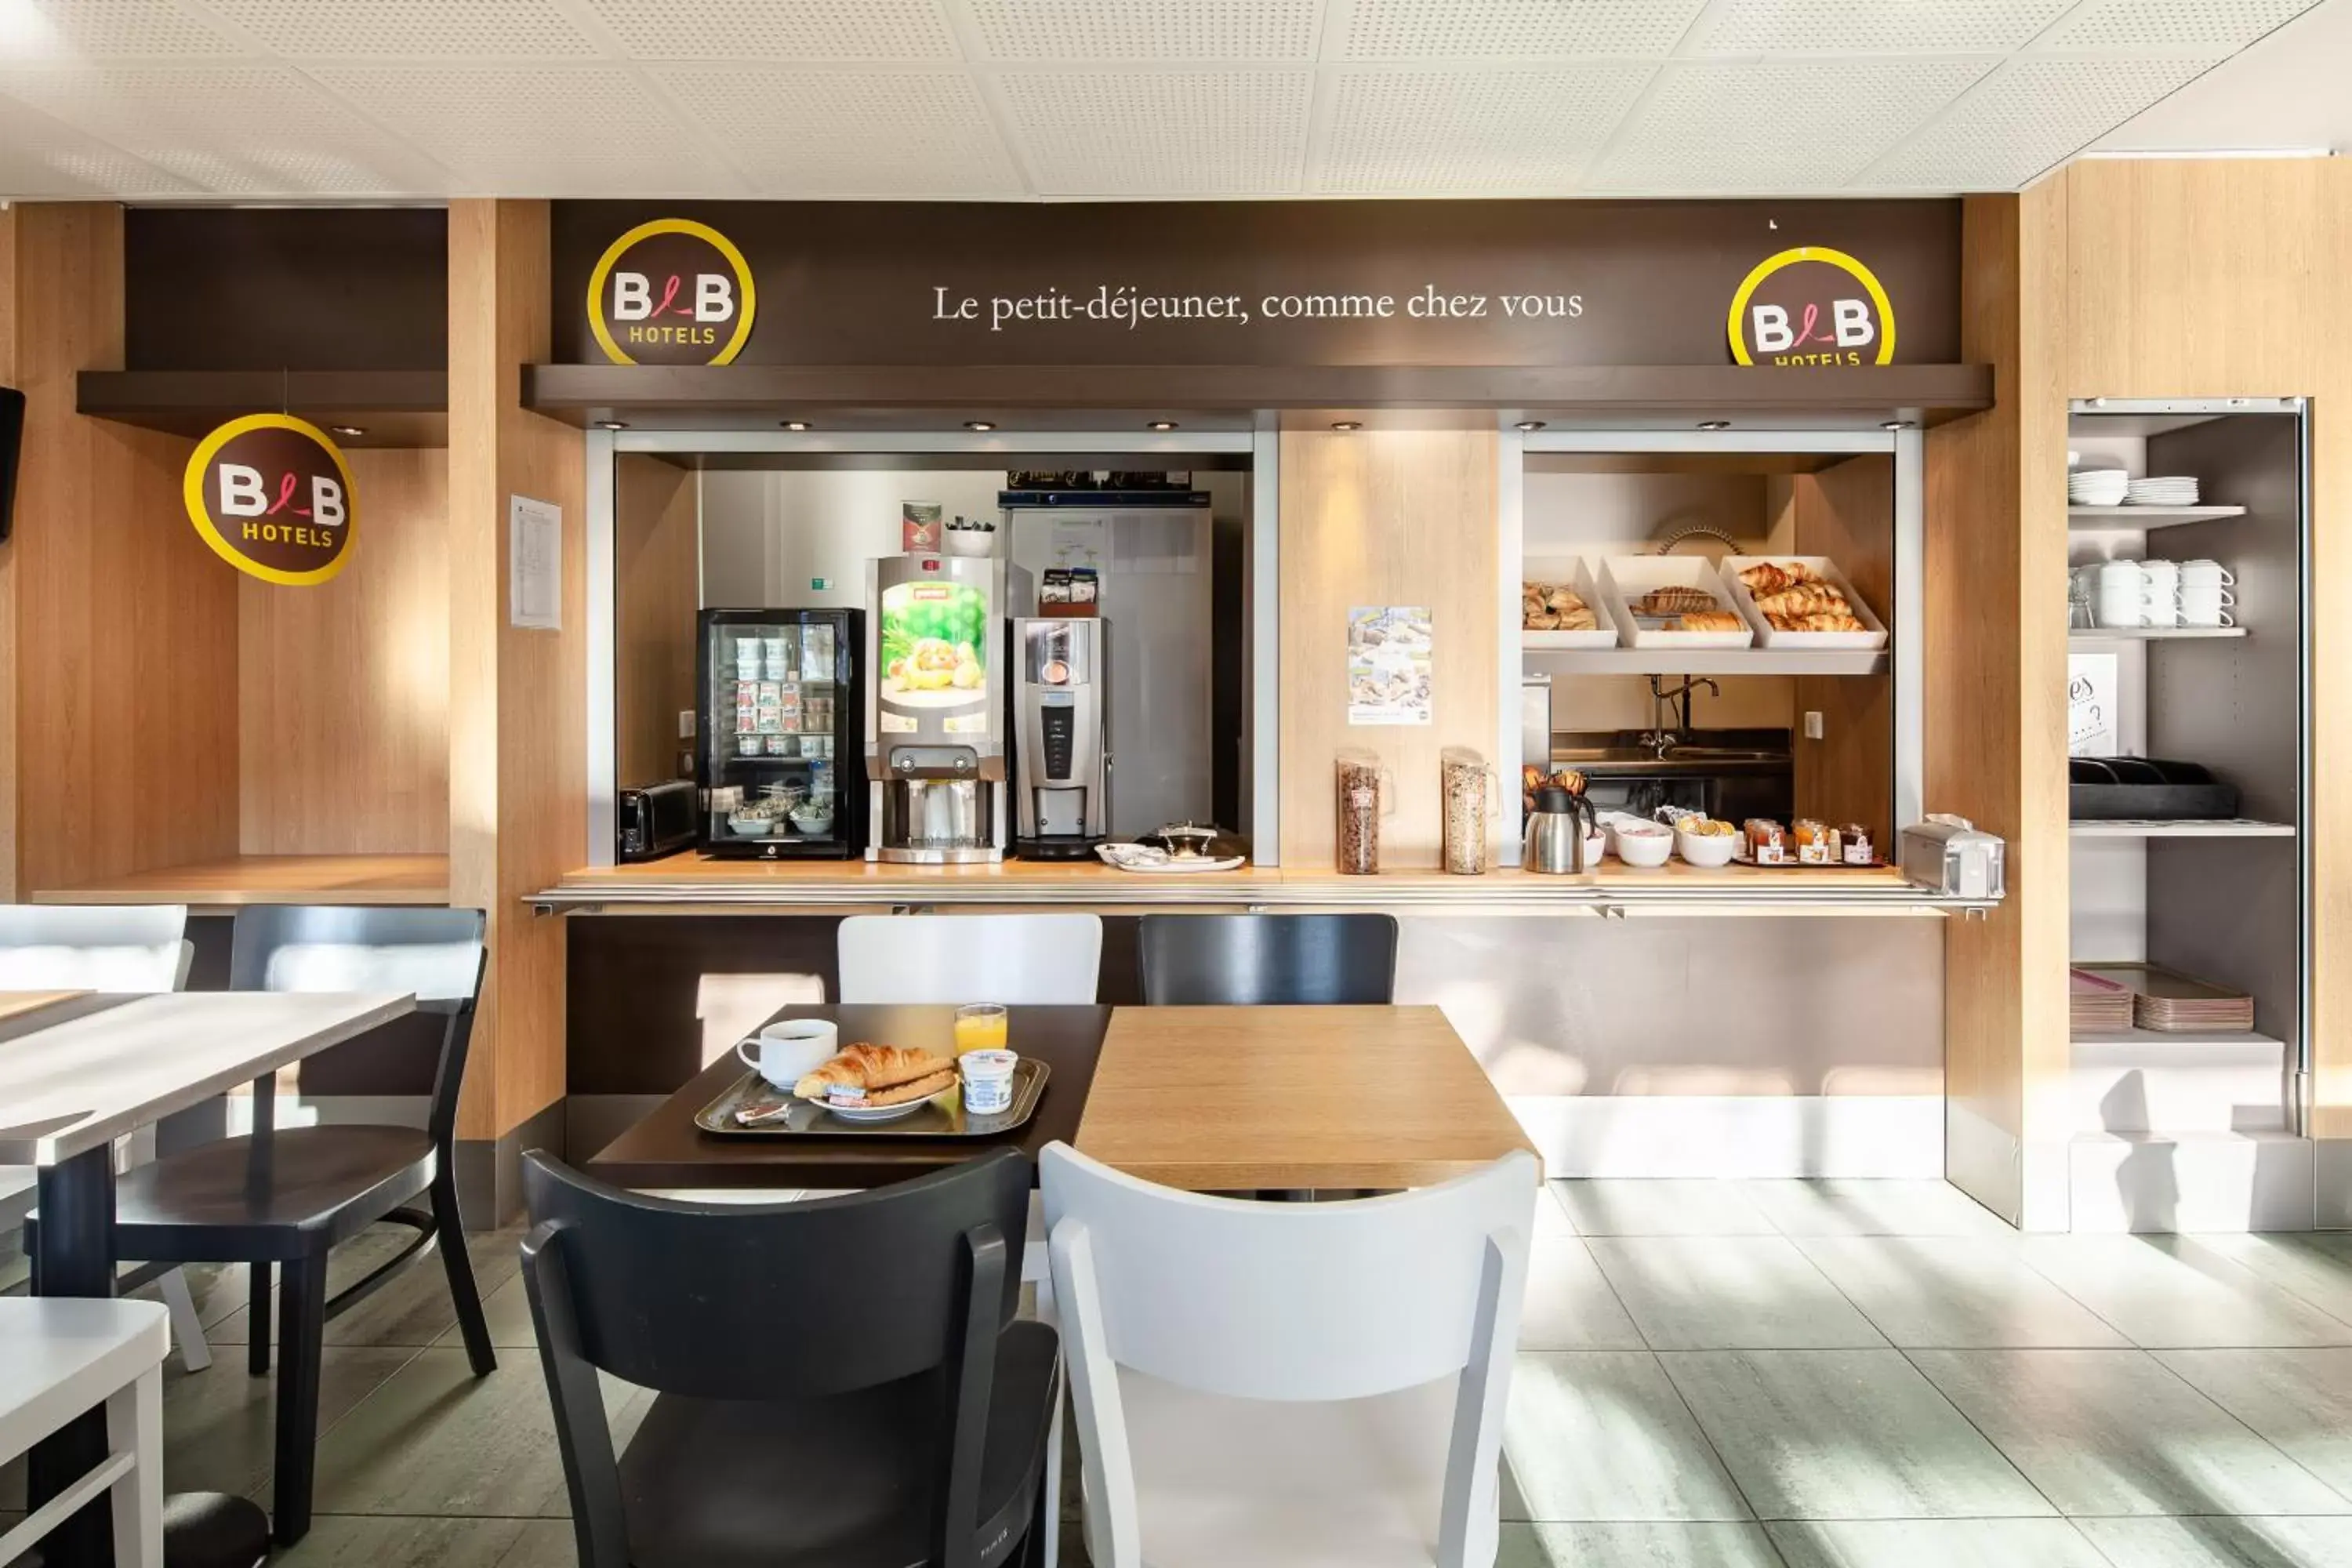 Buffet breakfast, Restaurant/Places to Eat in B&B HOTEL Pontault Combault